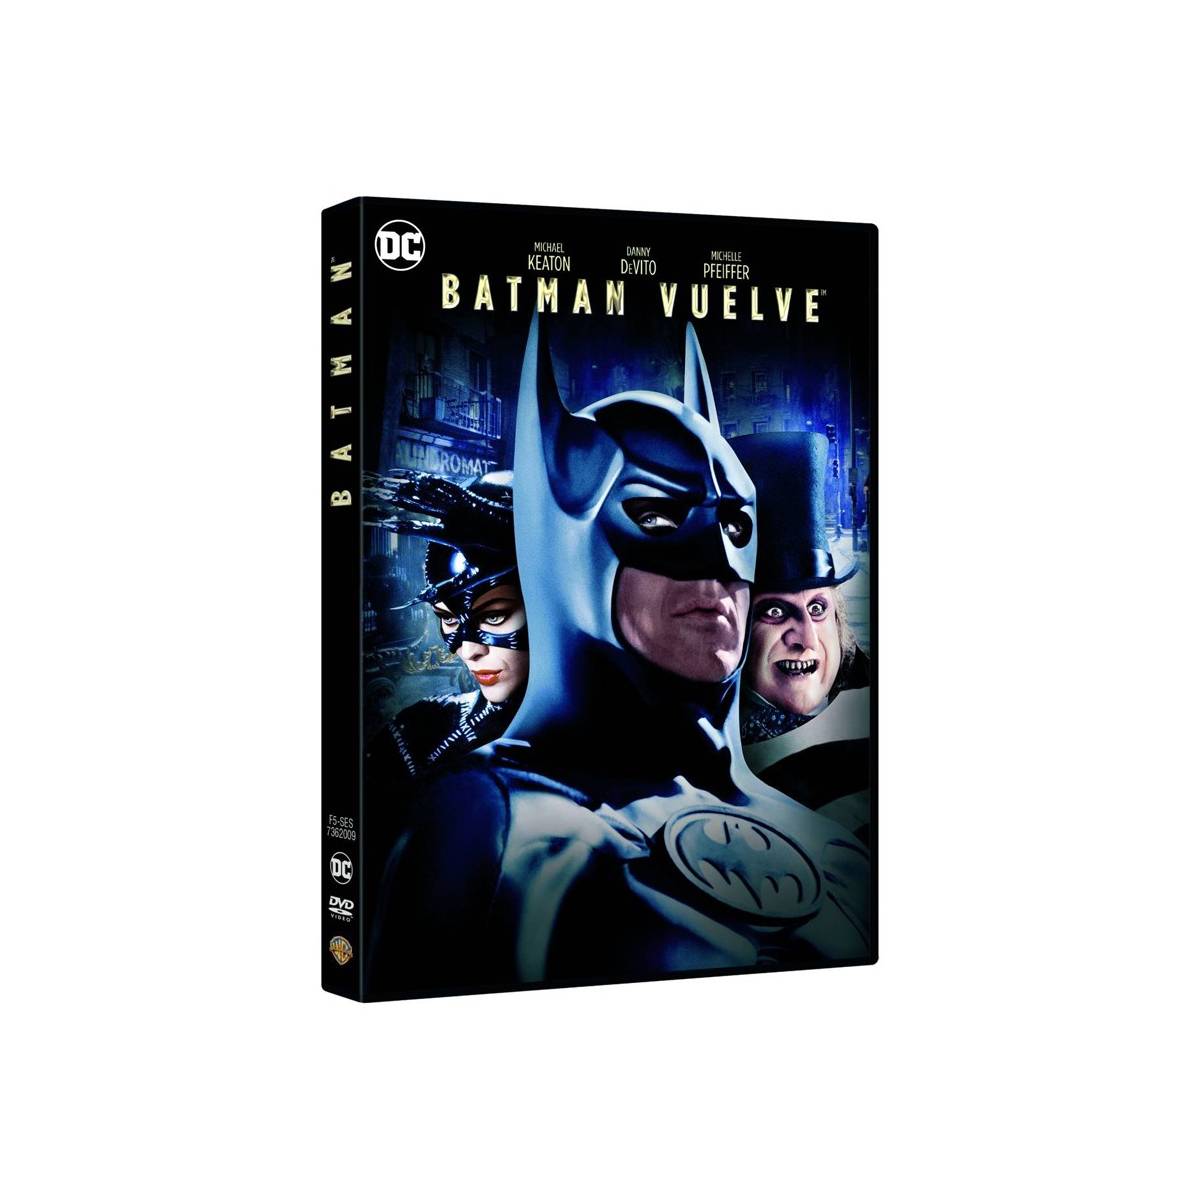 Batman Vuelve (Batman Returns)